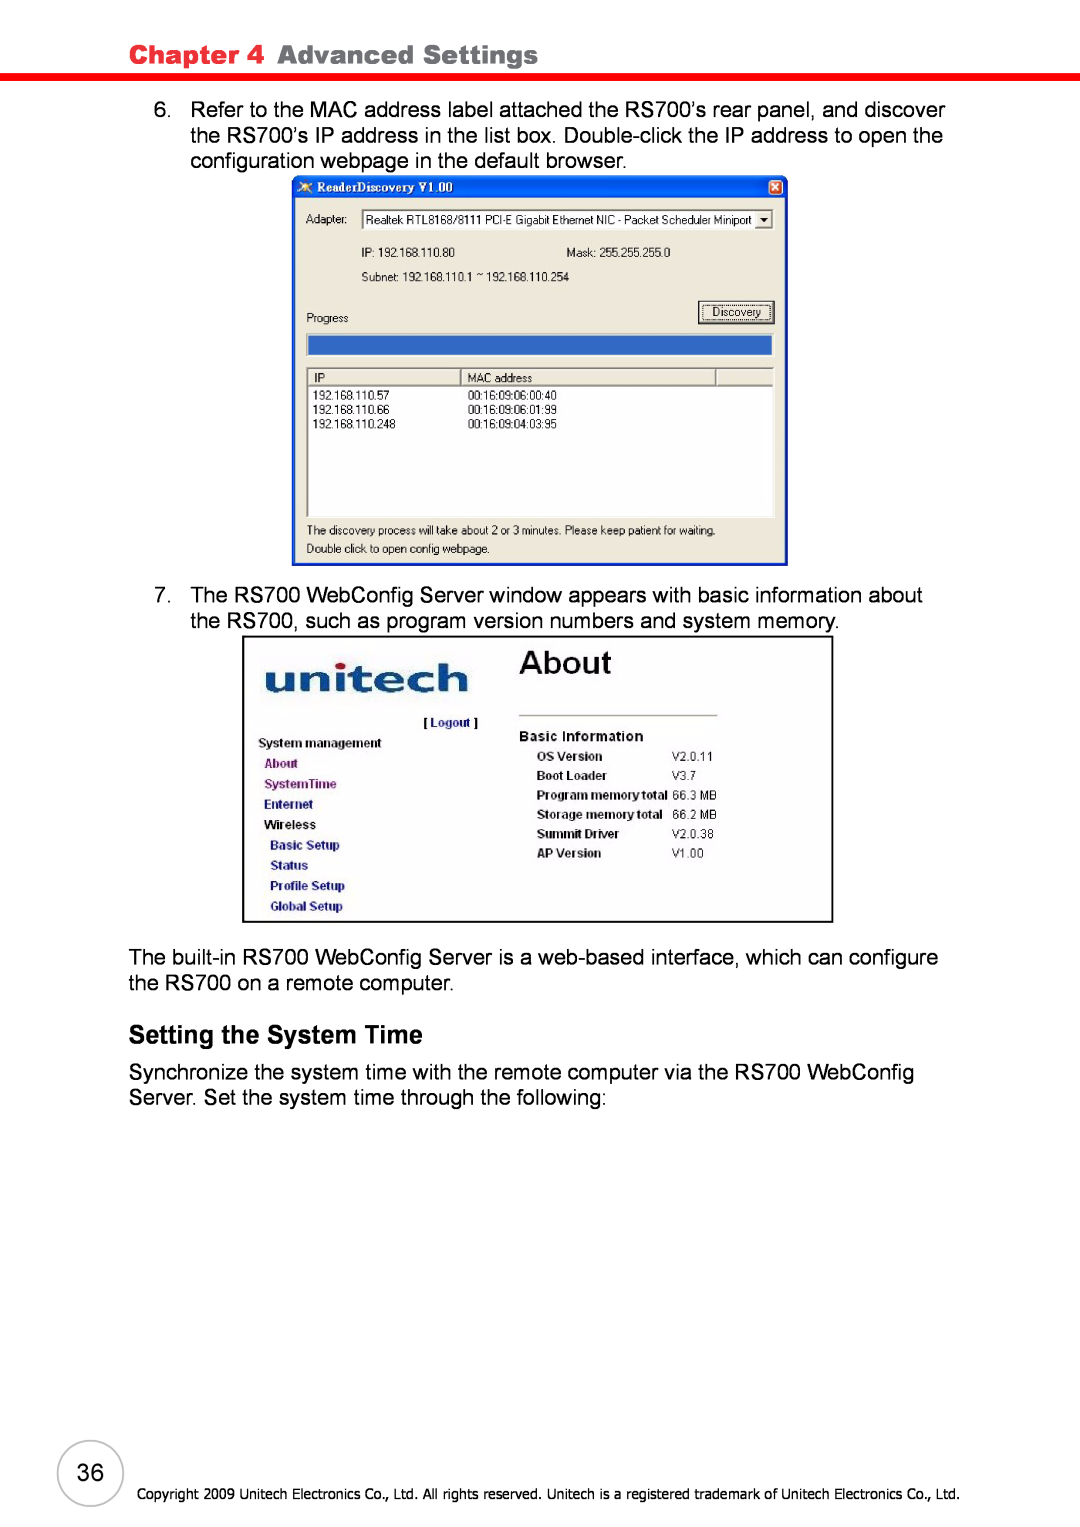 Unitech RS700 user manual Advanced Settings, Setting the System Time 